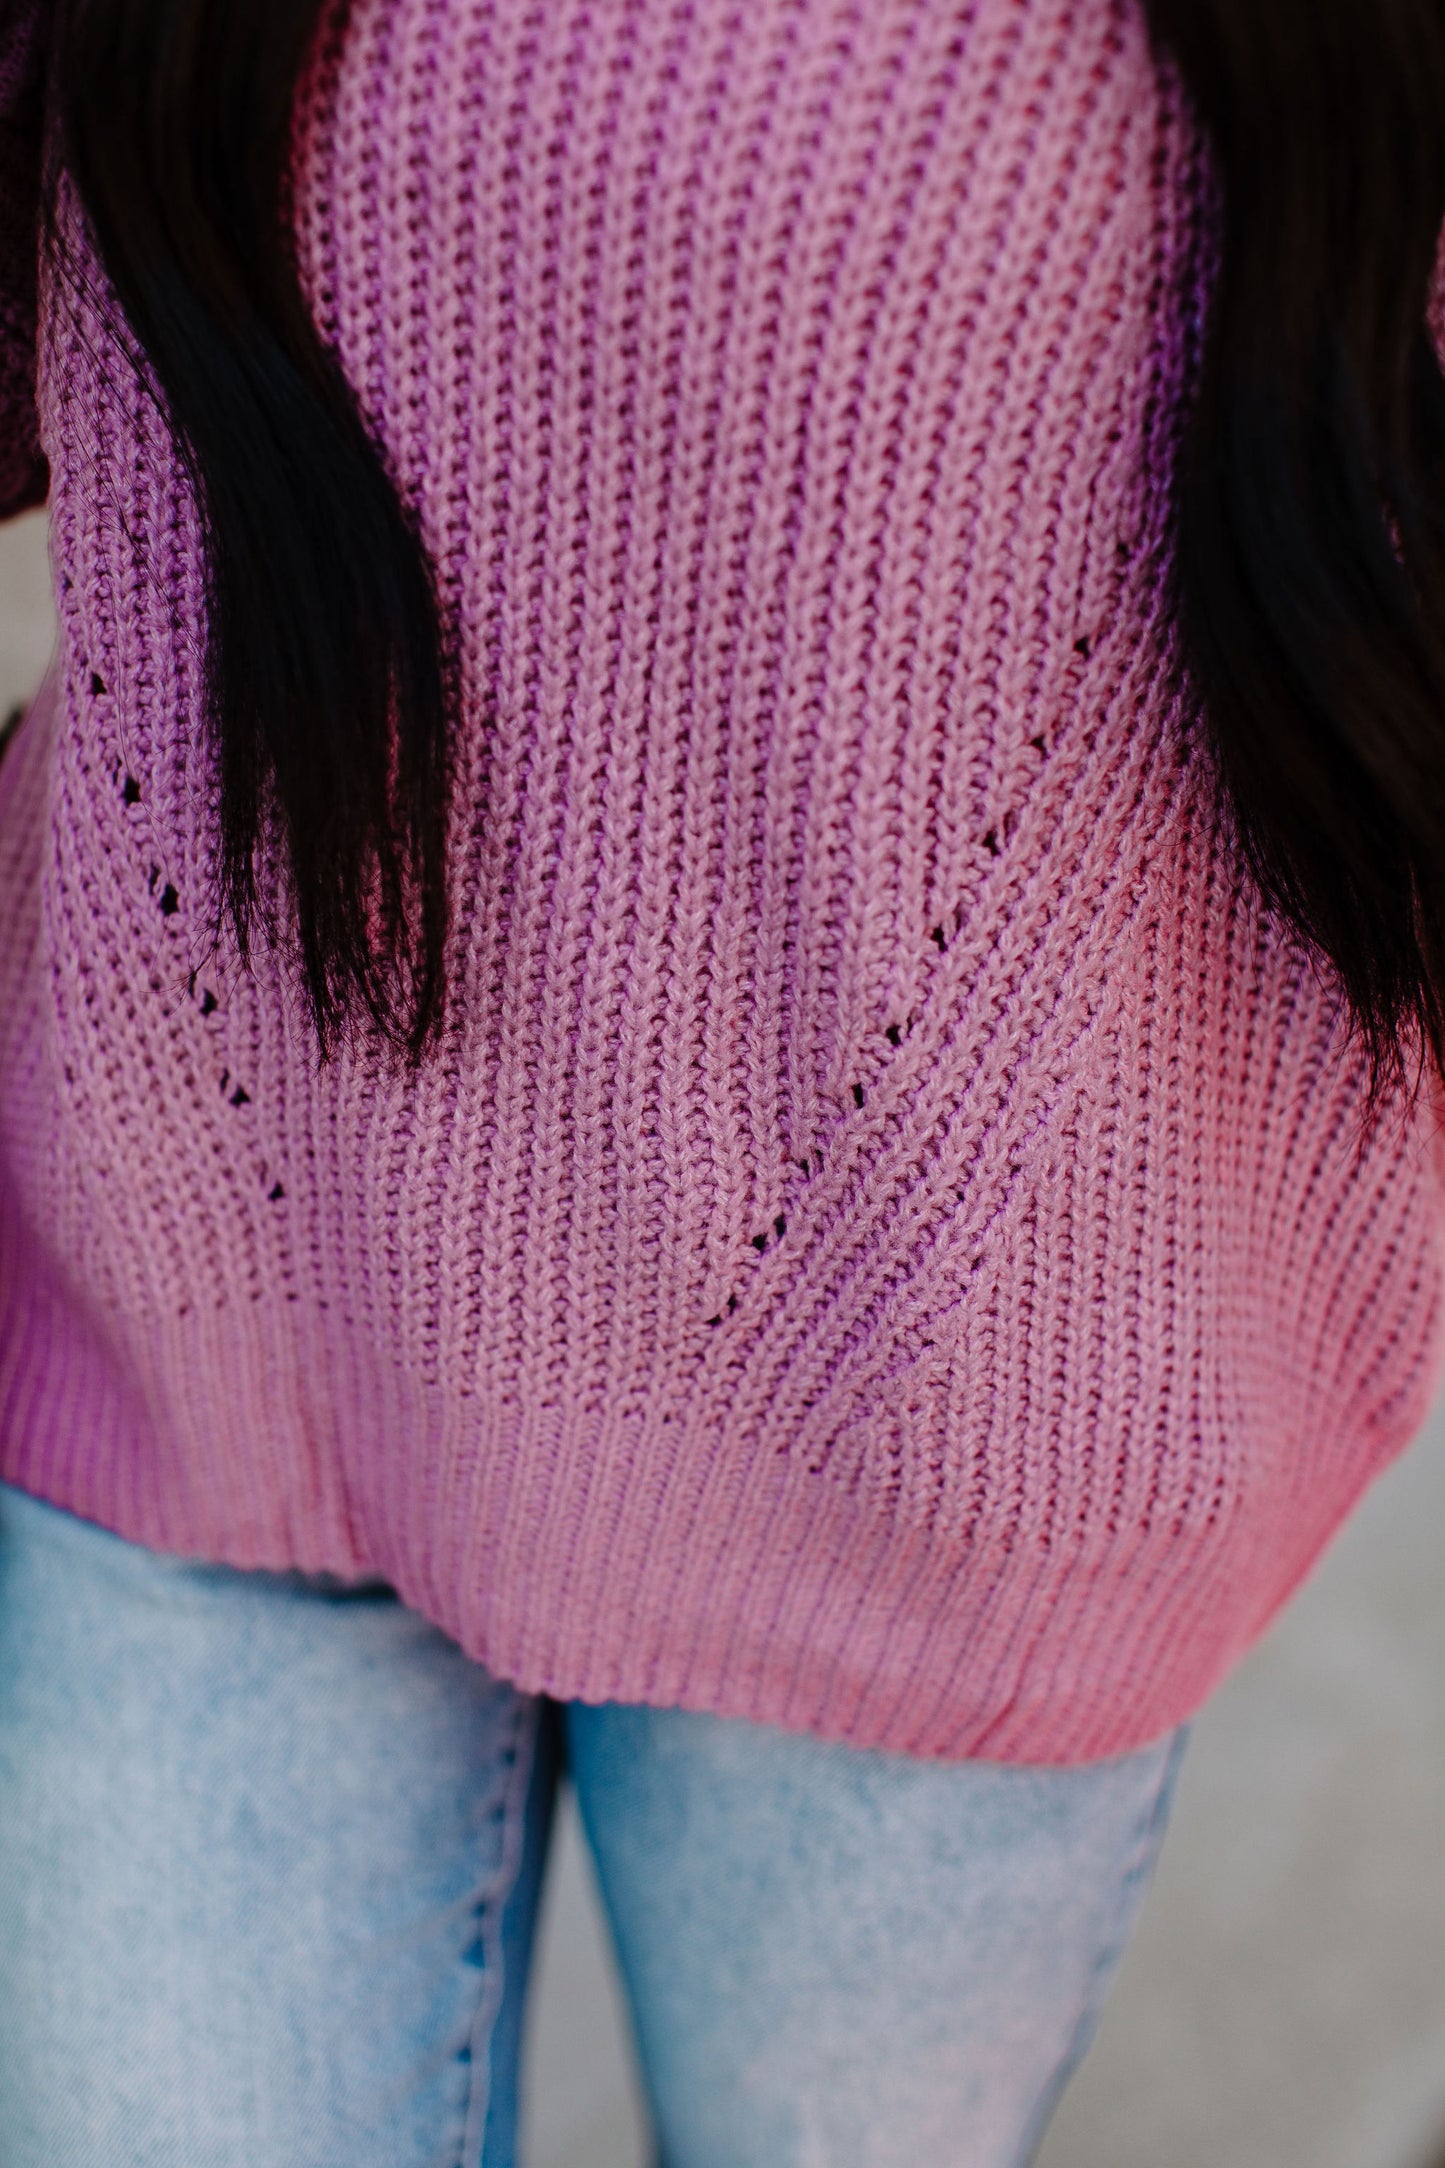 Bailey Sweater